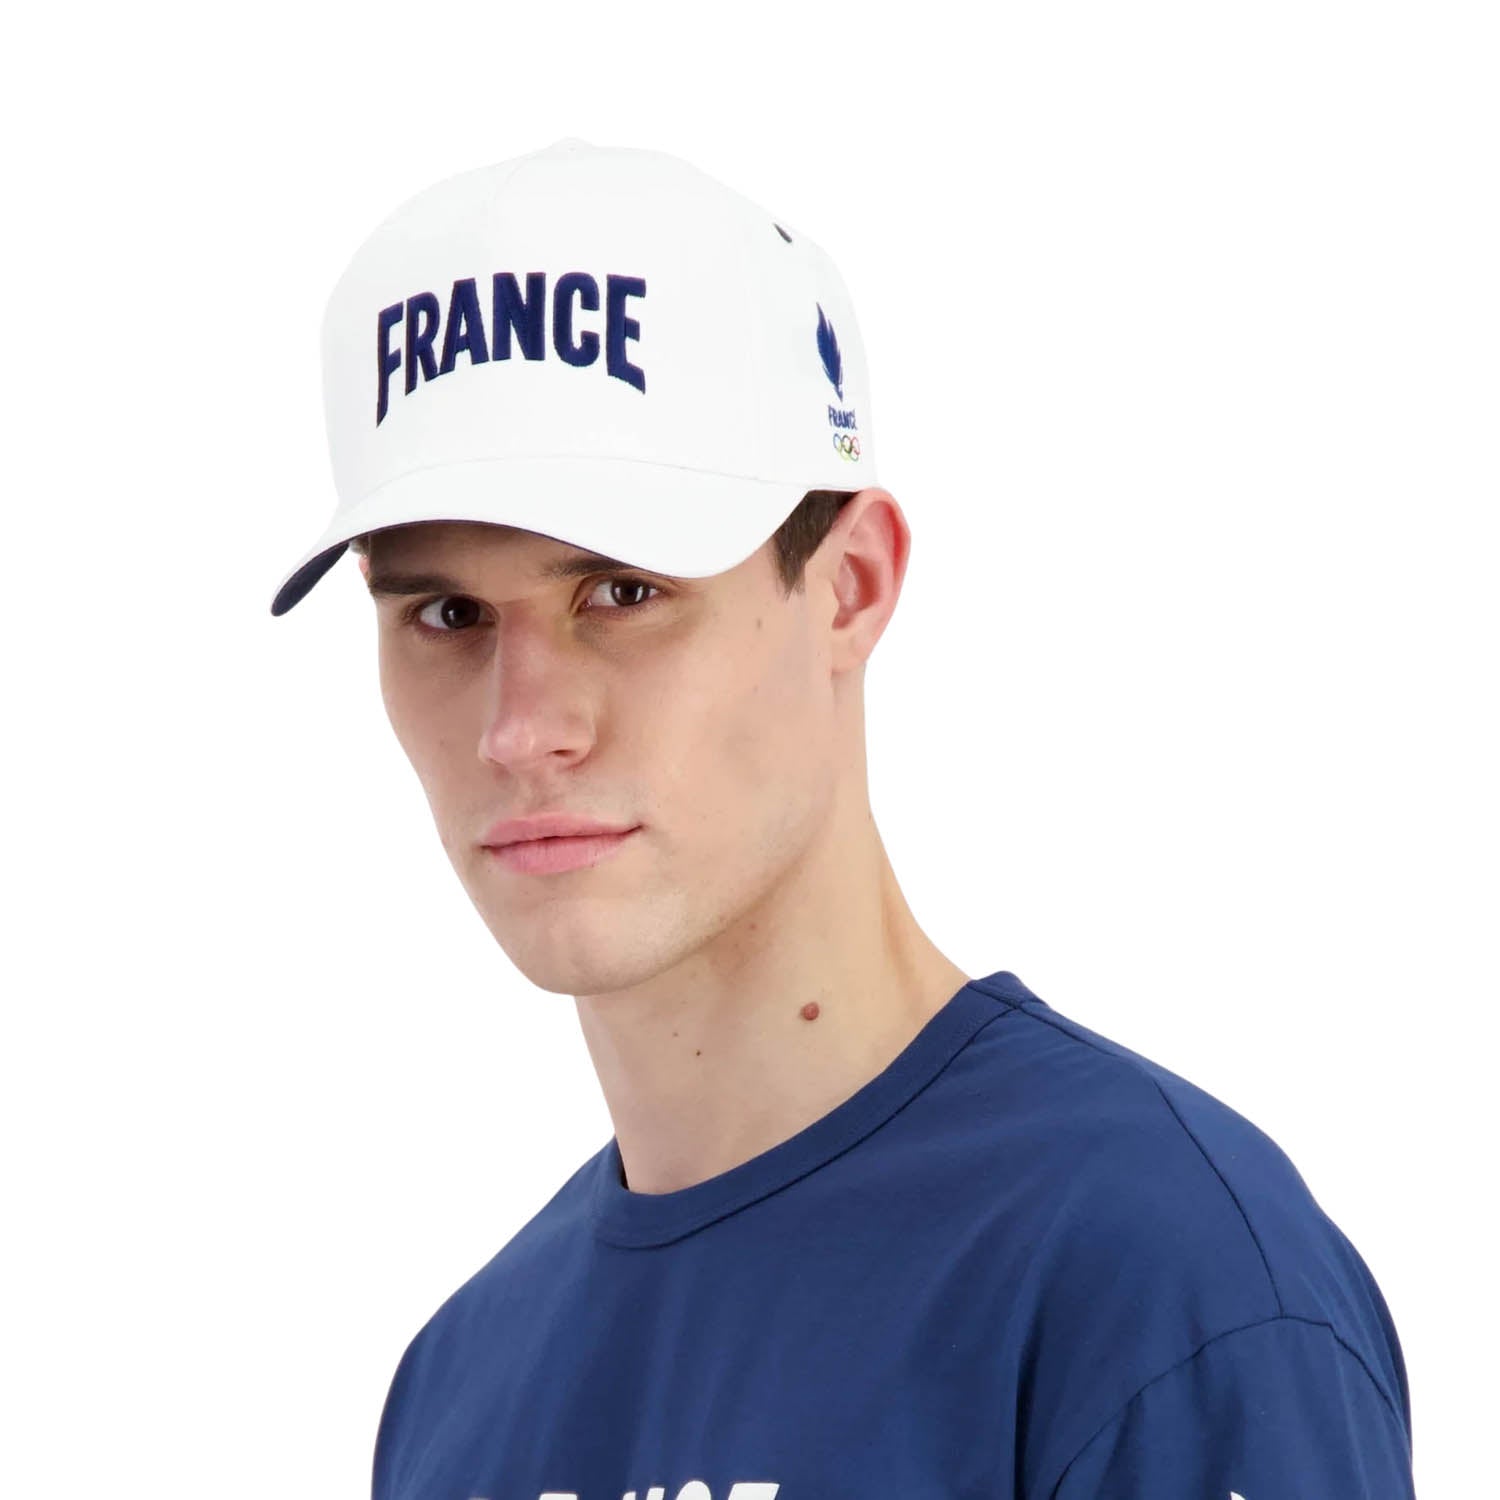 Casquette Equipe de France